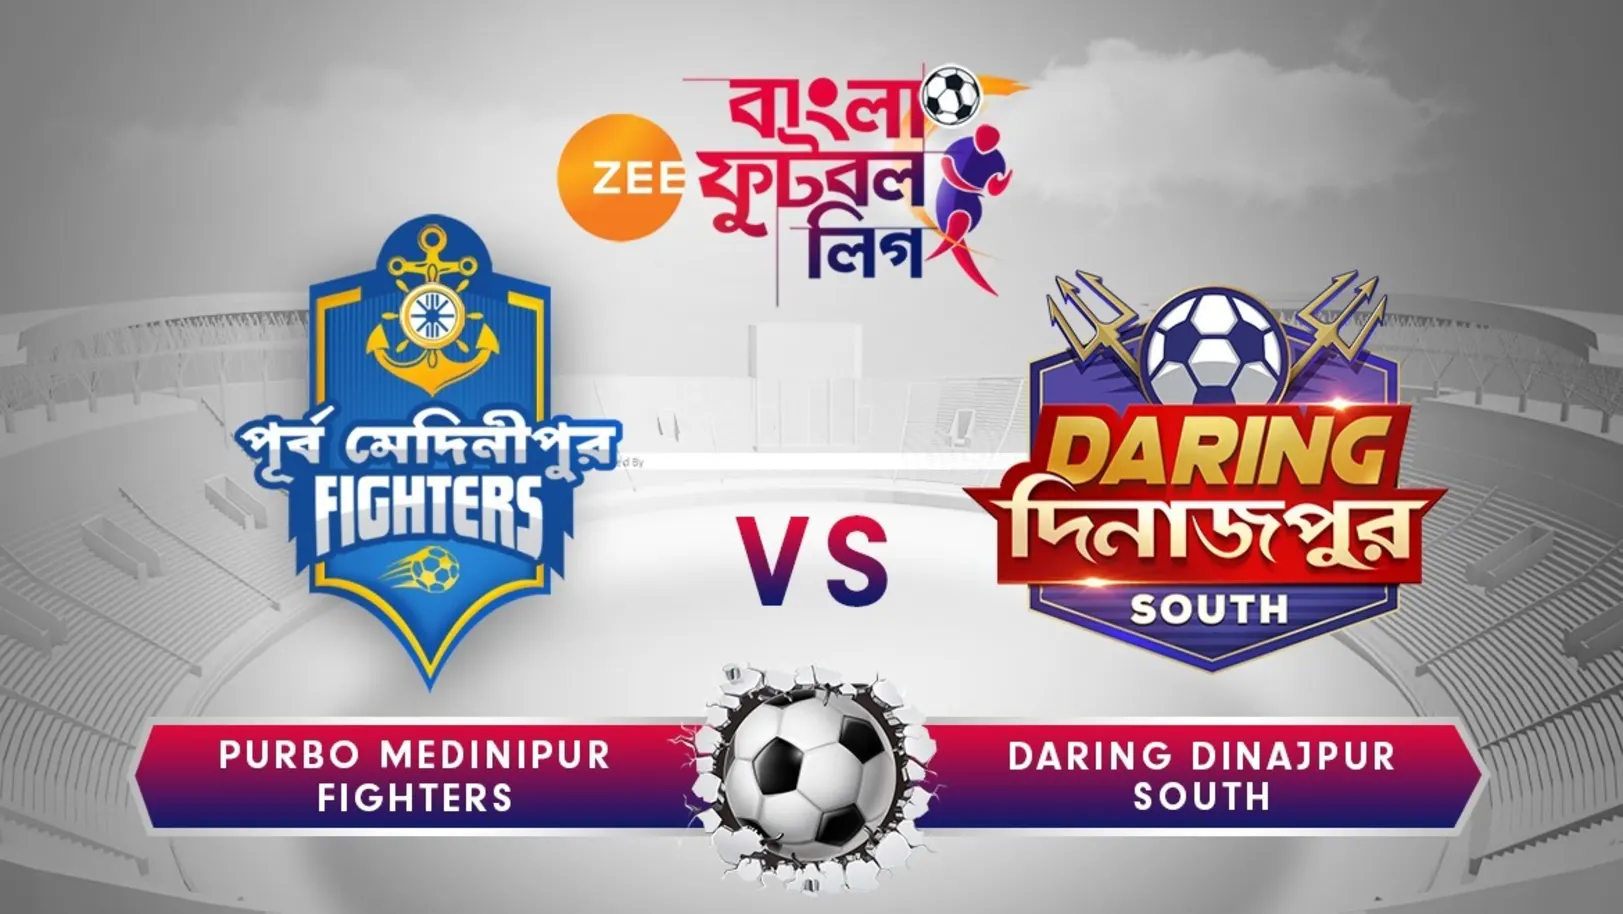 Purbo Medinipur Fighters v/s Darling Dinajpur South - June 15 - ZBFL 2019 Episode 34